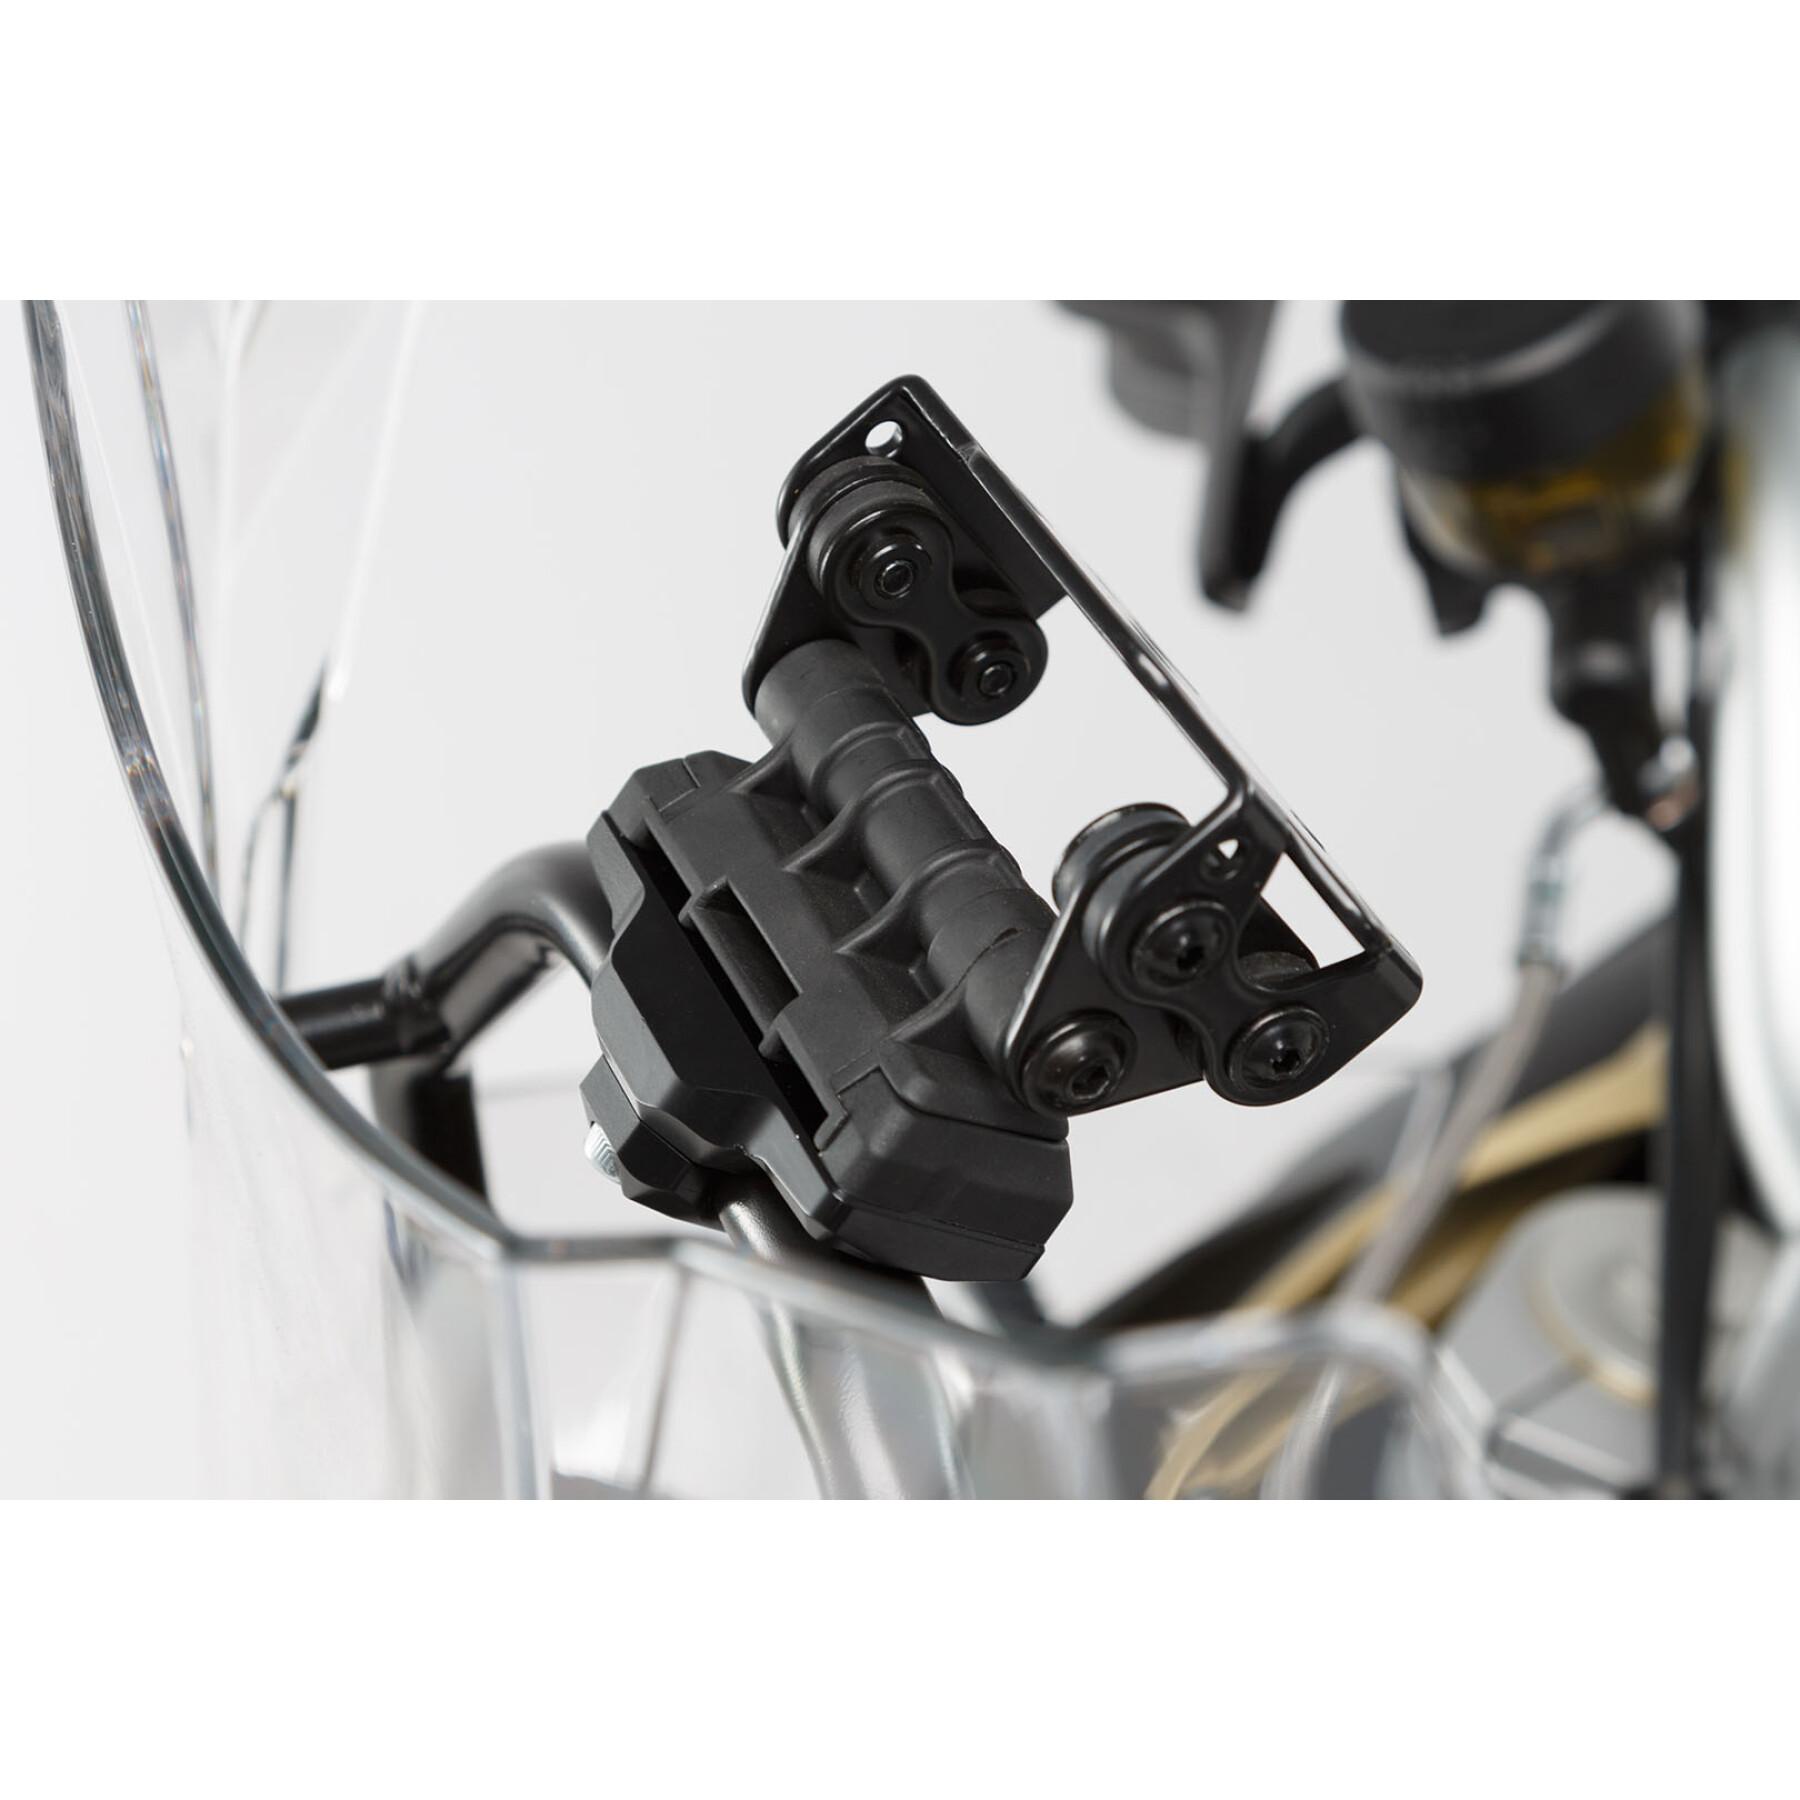 Motorcycle gps bracket for 13/16mm diameter bar SW-Motech